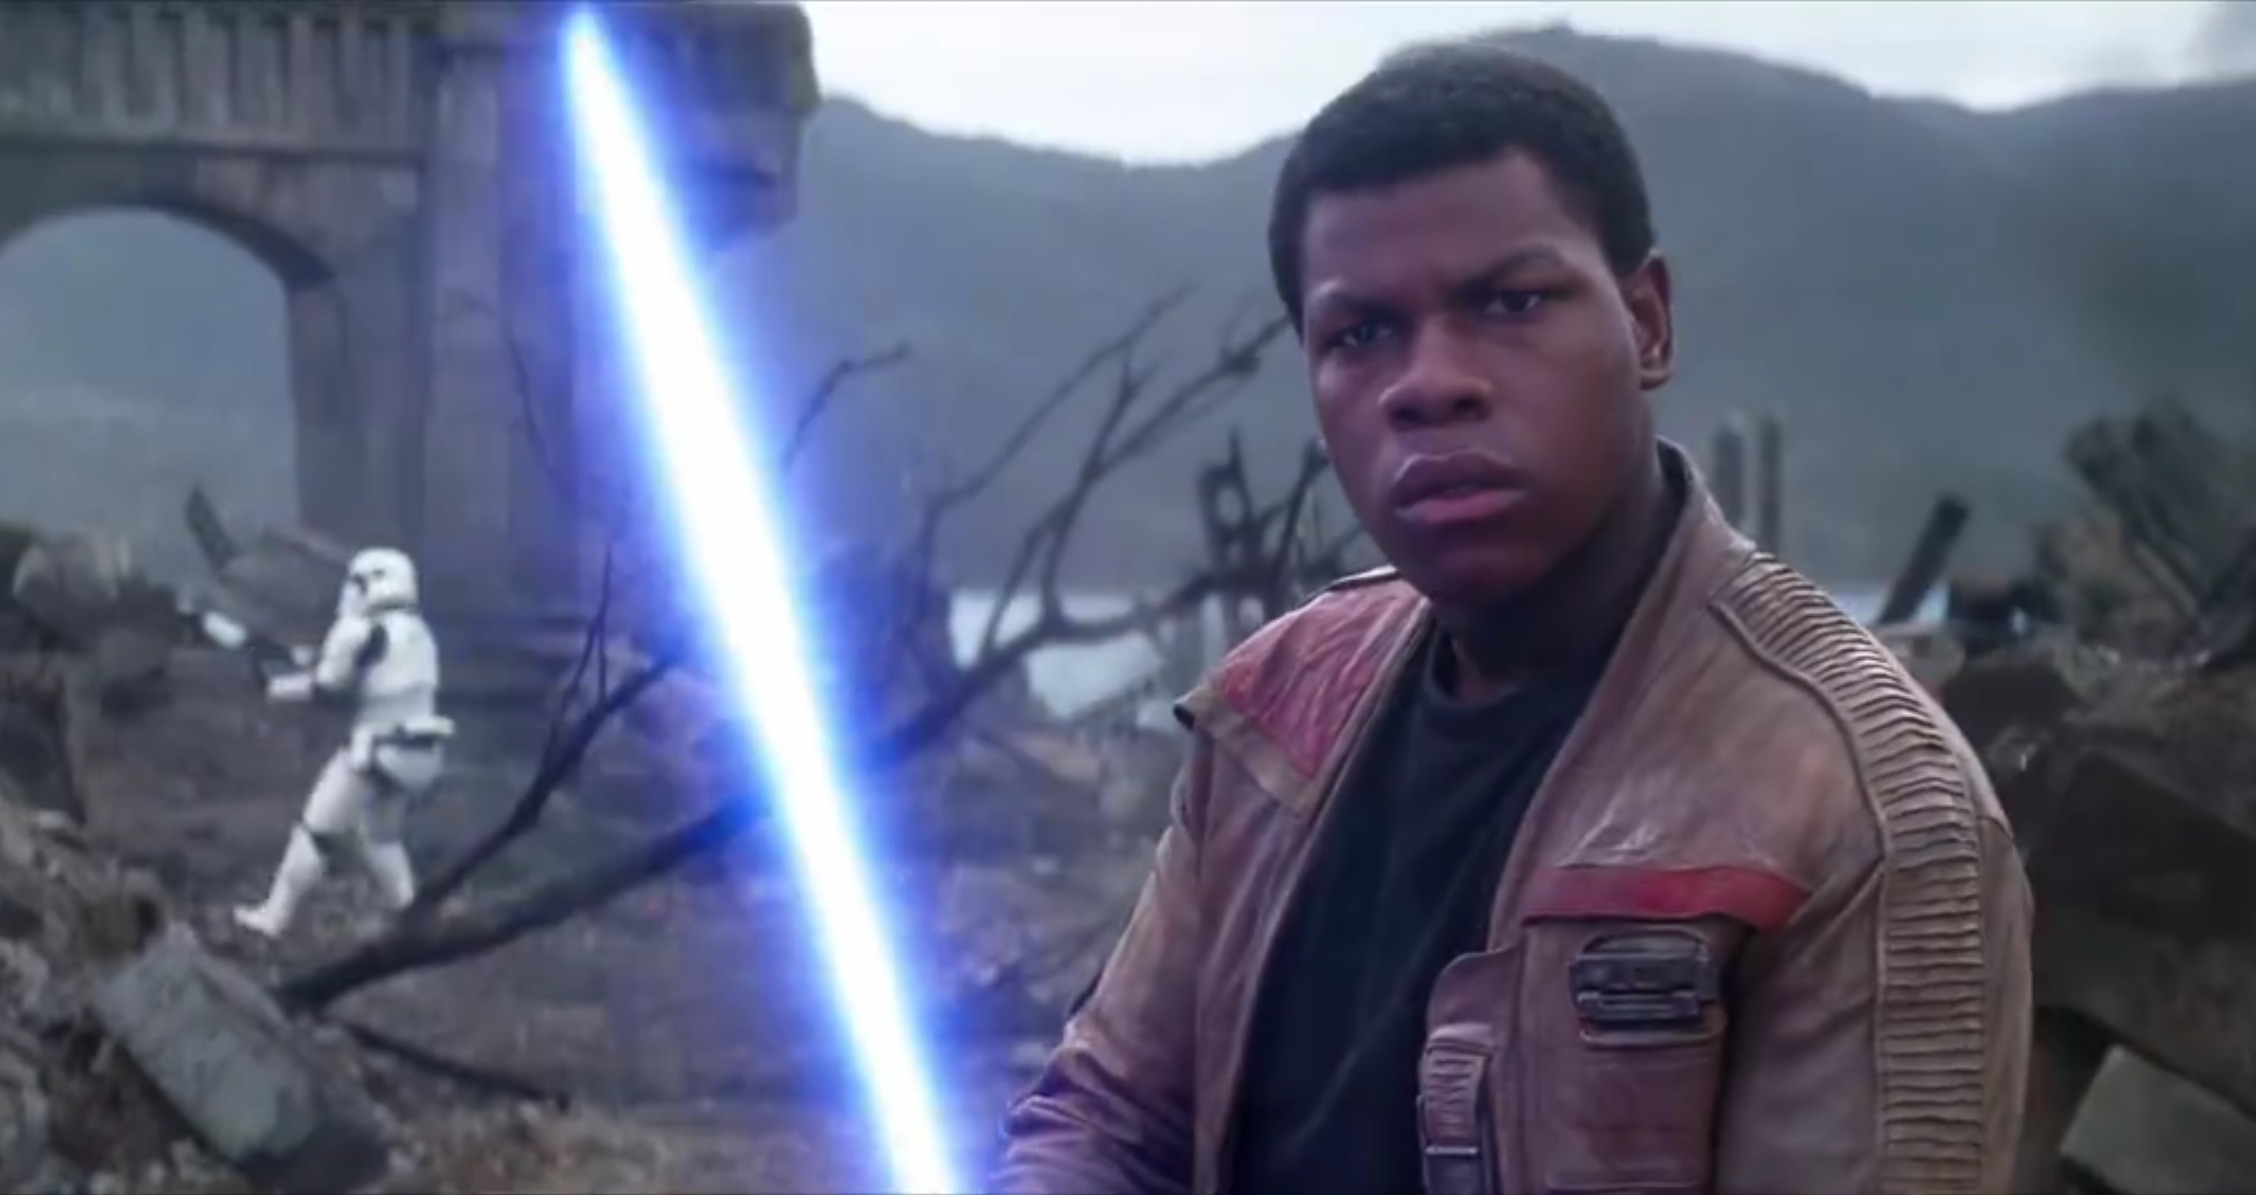 Finn - Star Wars The Force Awakens - Spot TV